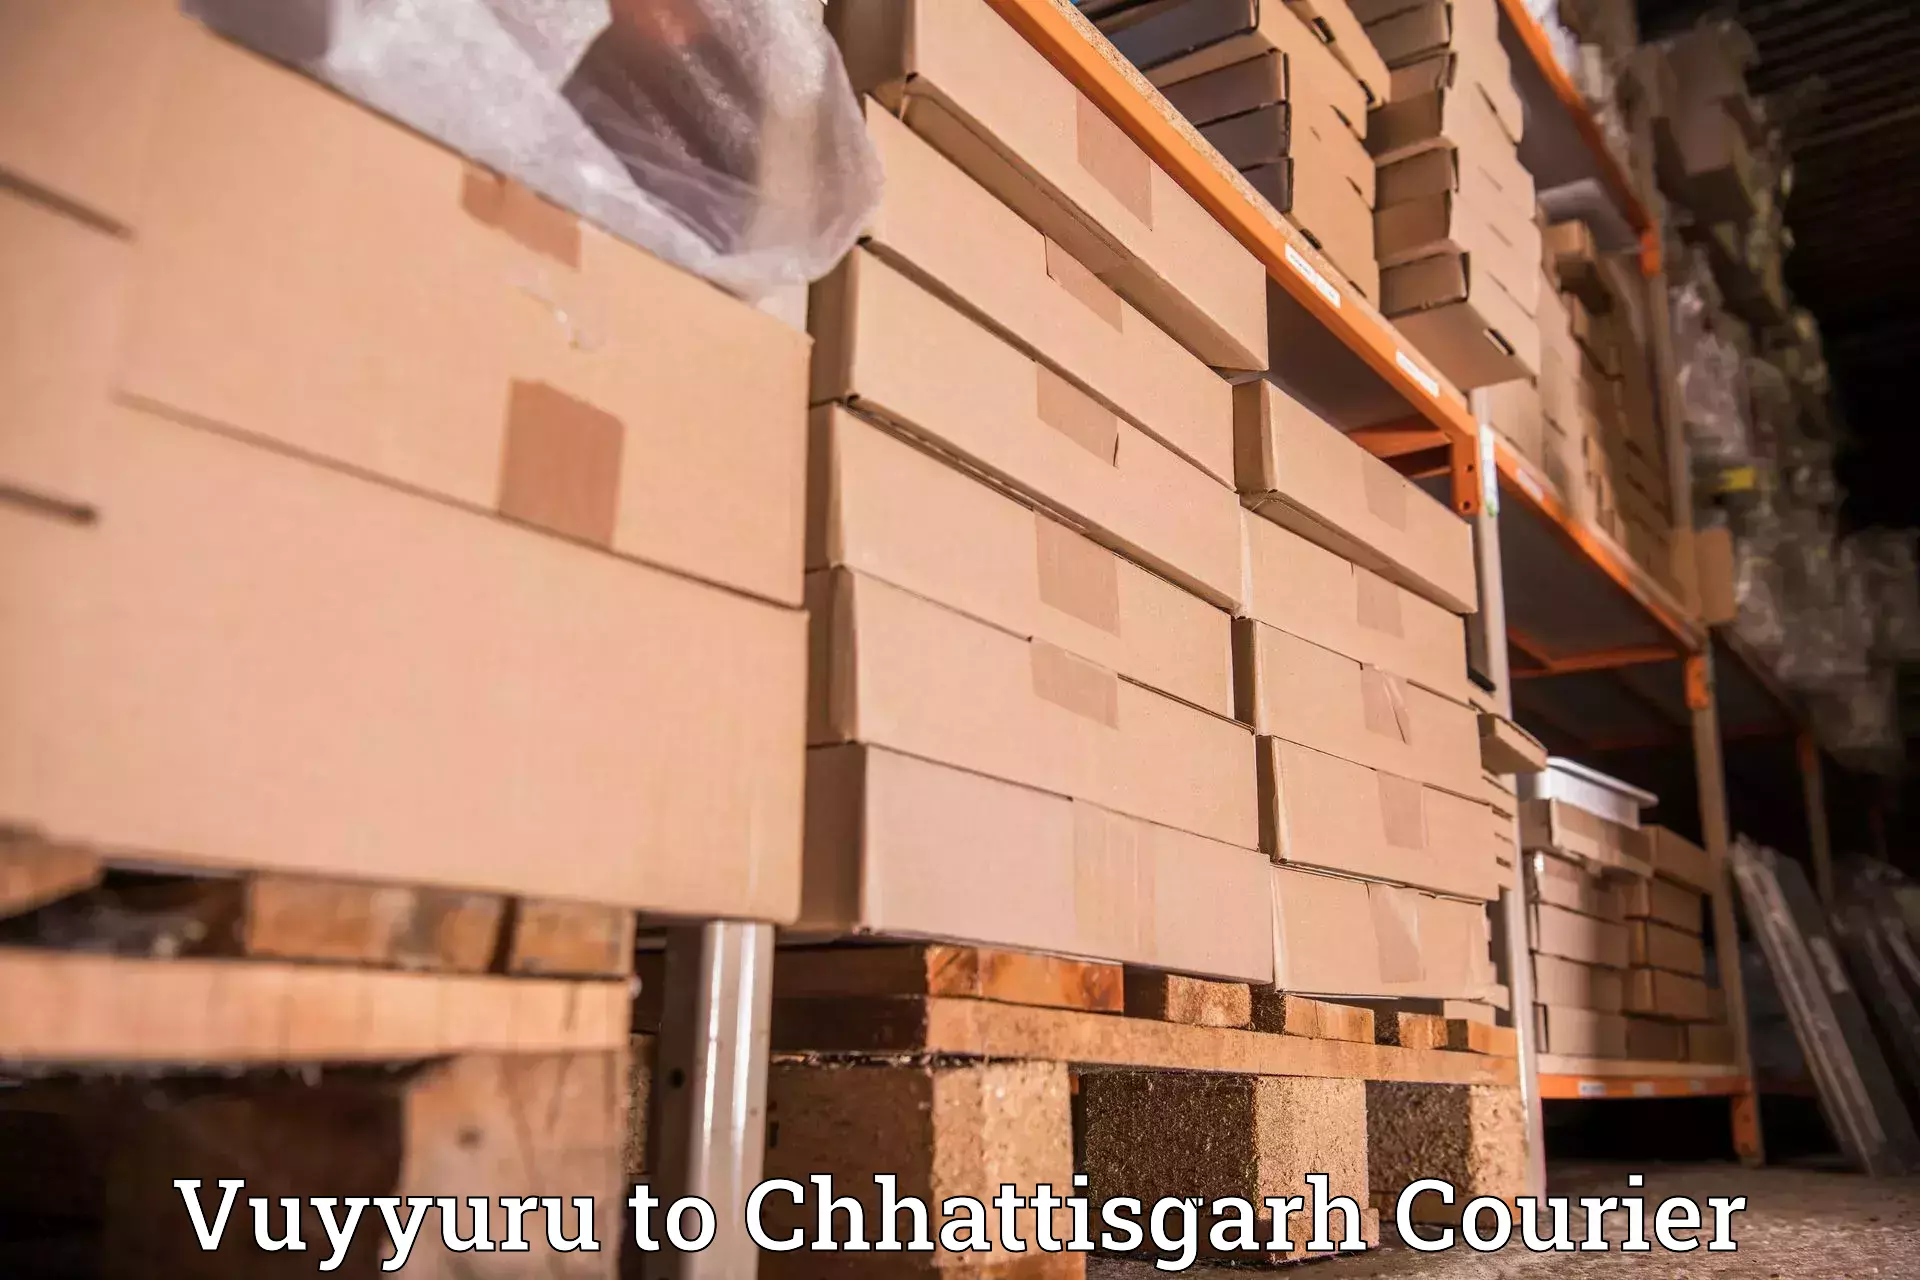 Cargo delivery service Vuyyuru to Chhattisgarh